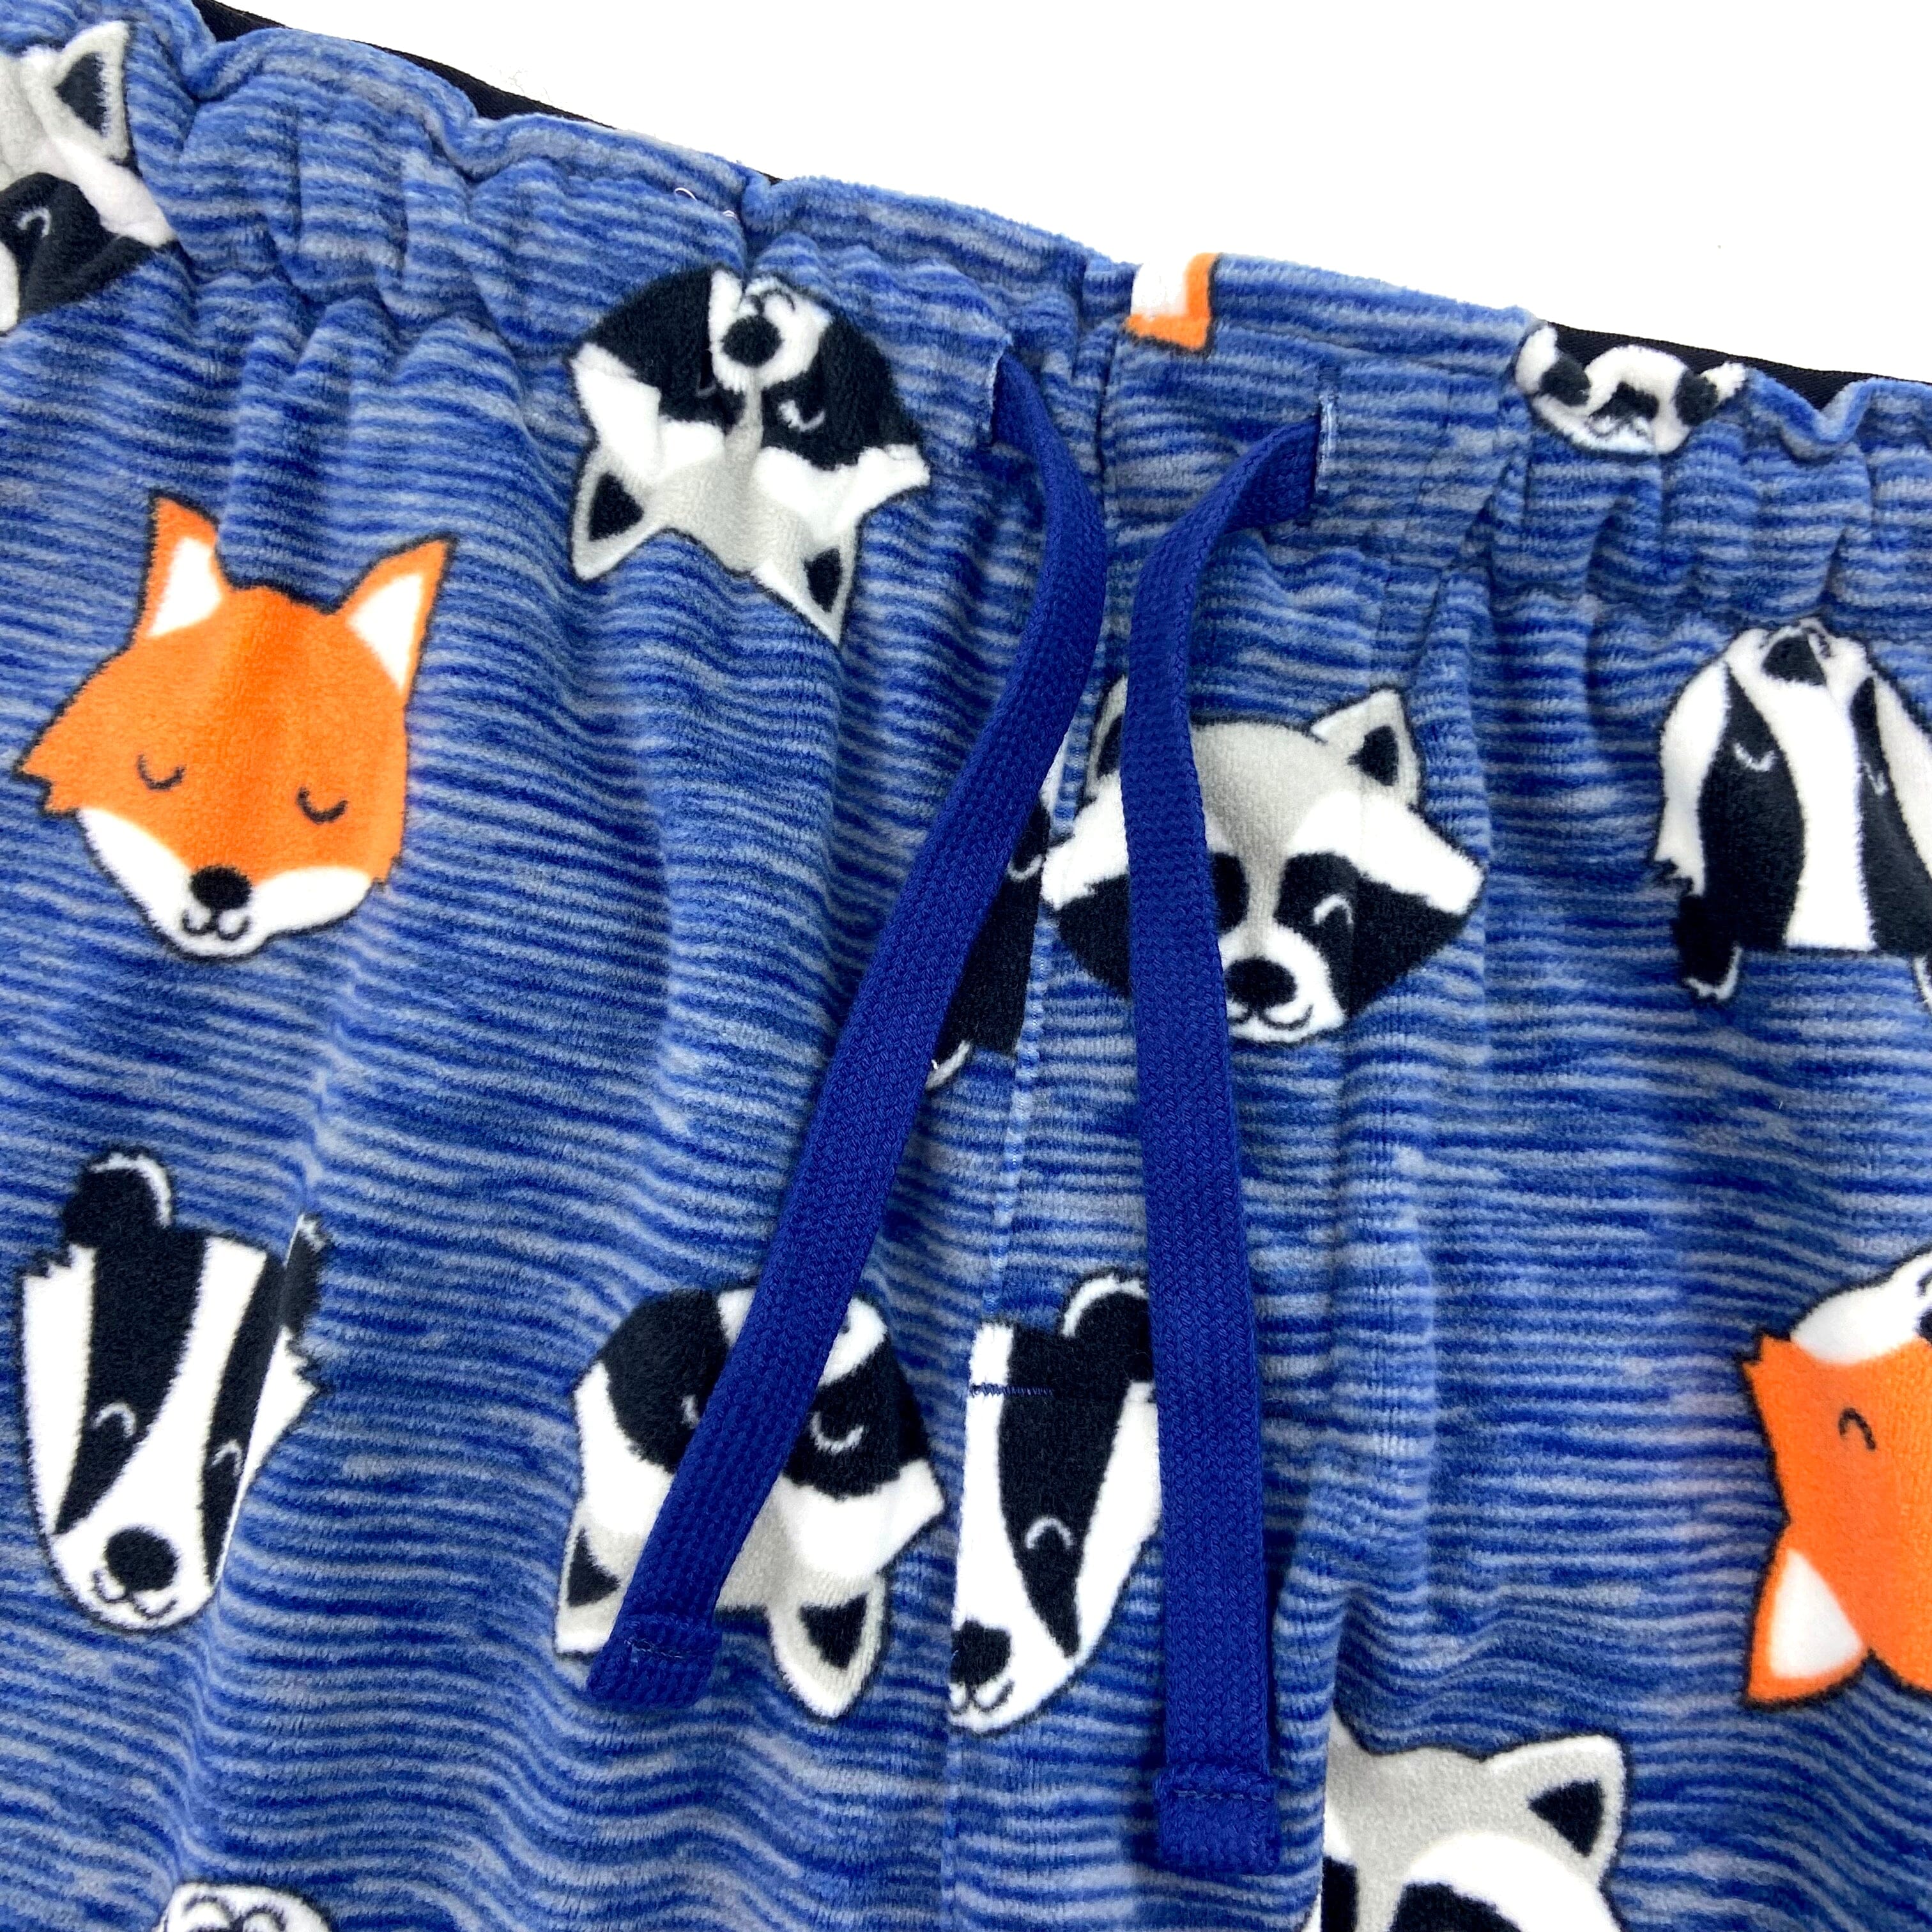 Fox & Racoon Print Pajama Pants For Men. Buy Fox Lounge Pants Online